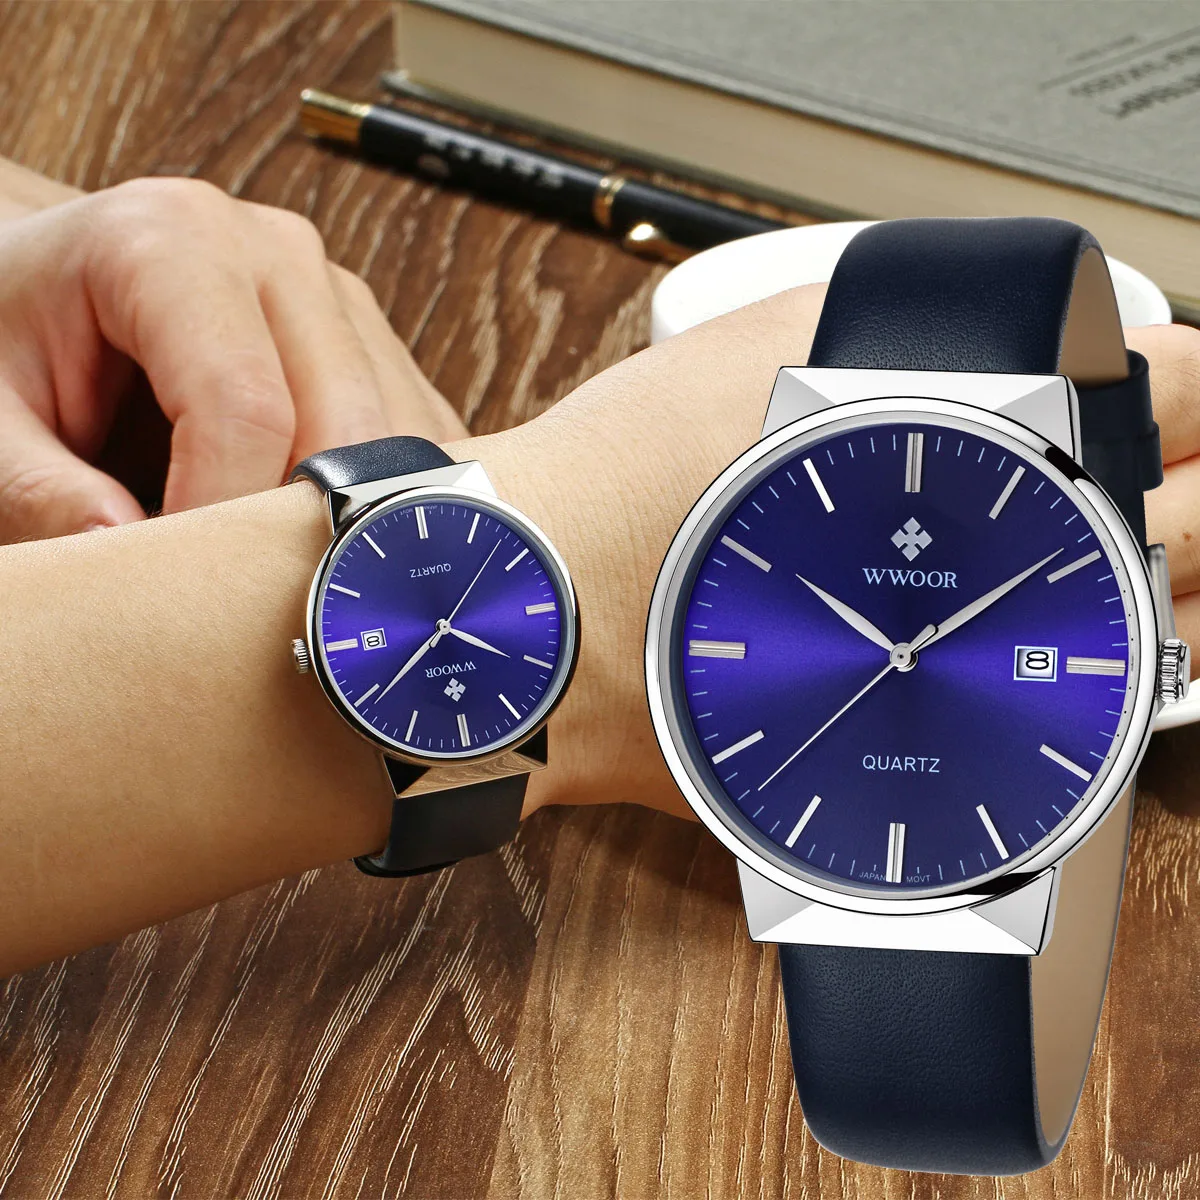 

WWOOR Top Brand Luxury Fashion Casual Watch For Men Waterproof Leather Clock Sport Man Watch Quartz Wristwatch Relogio Masculino